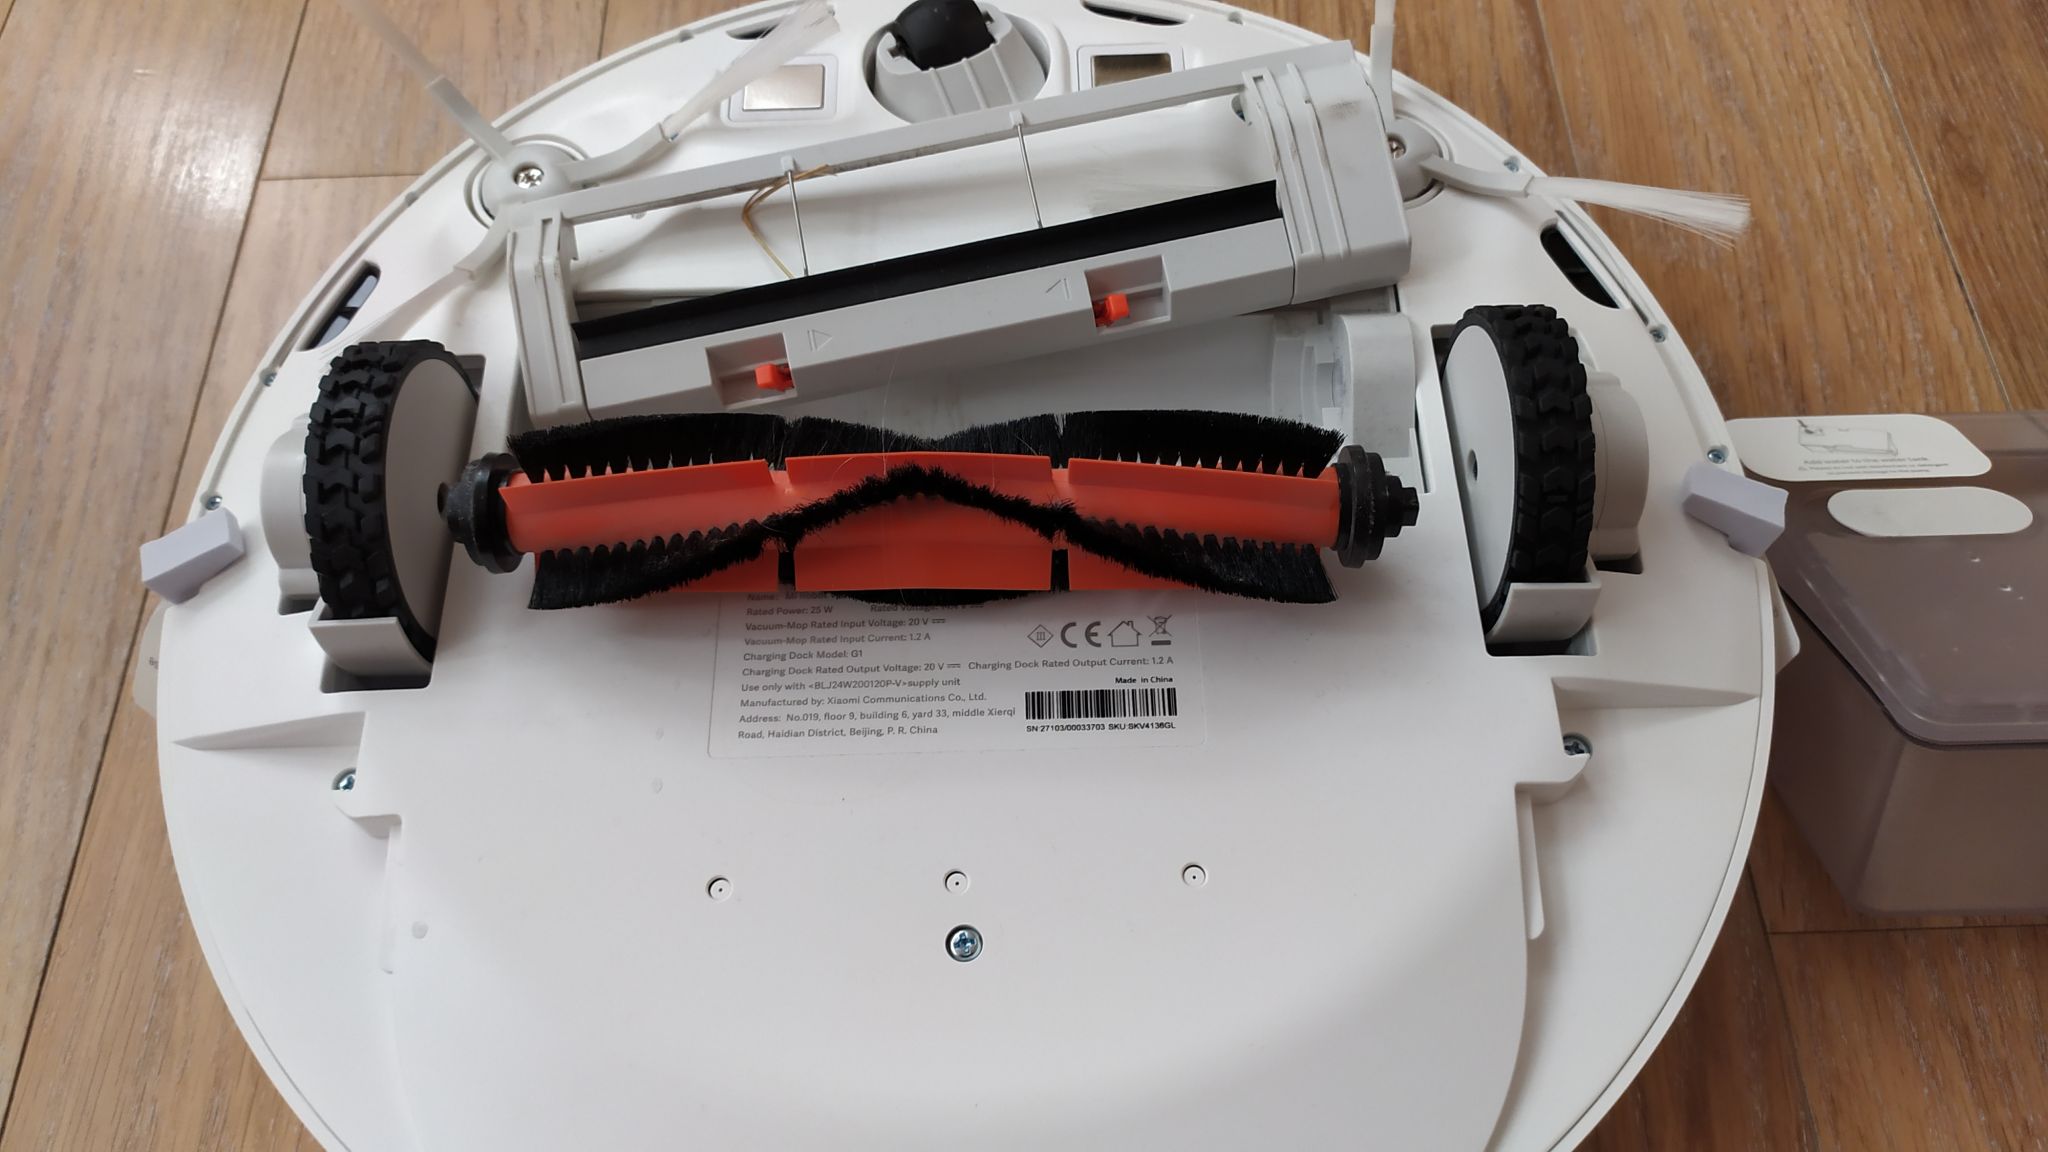 Mopping Robot Rs6 Vacuum Xiaomi